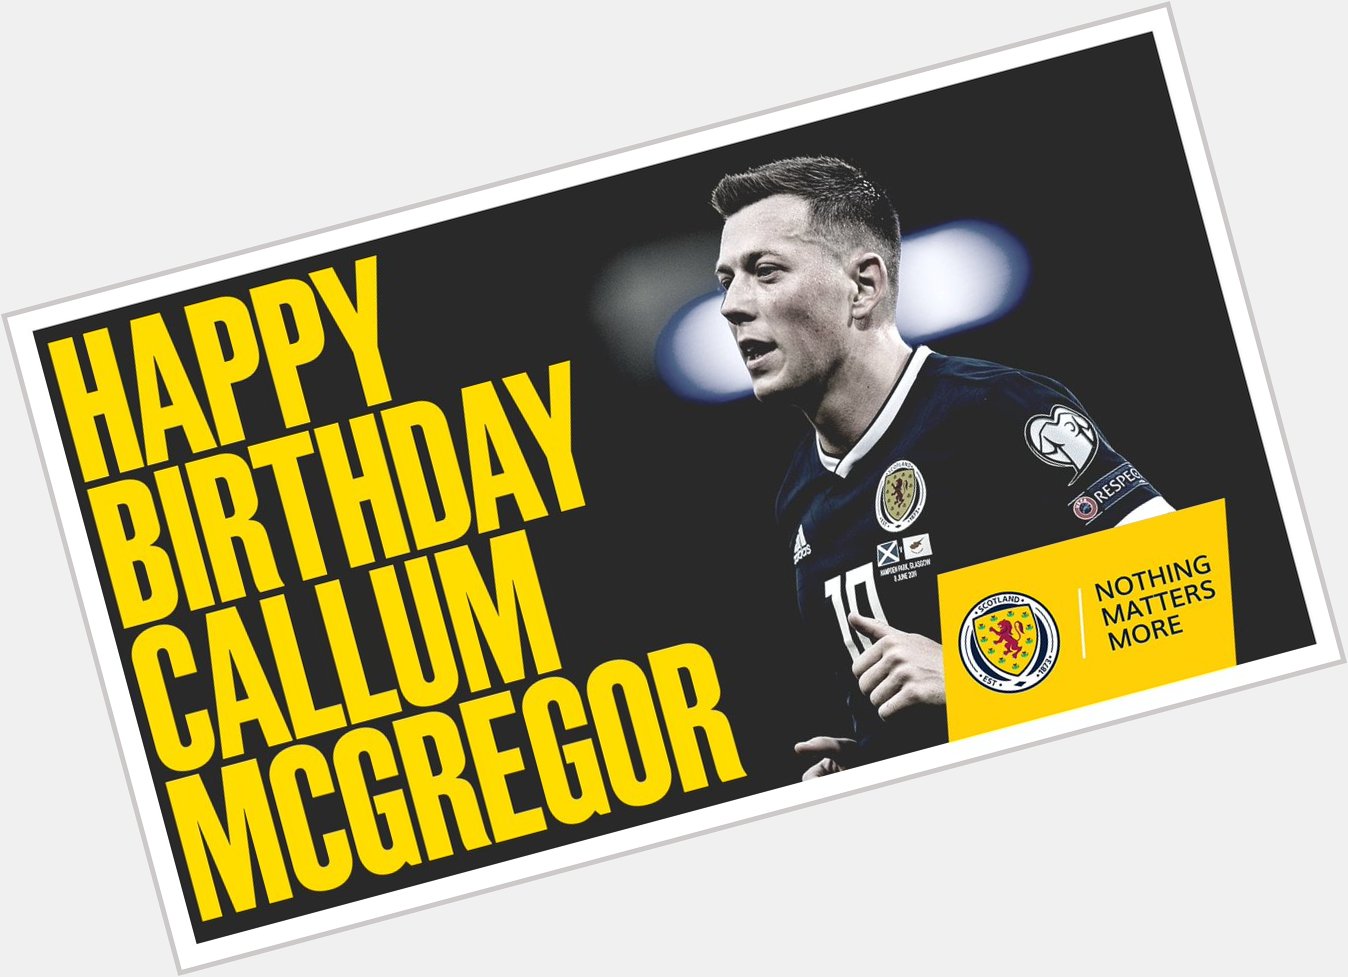  | Wishing a Happy Birthday to Callum McGregor! 